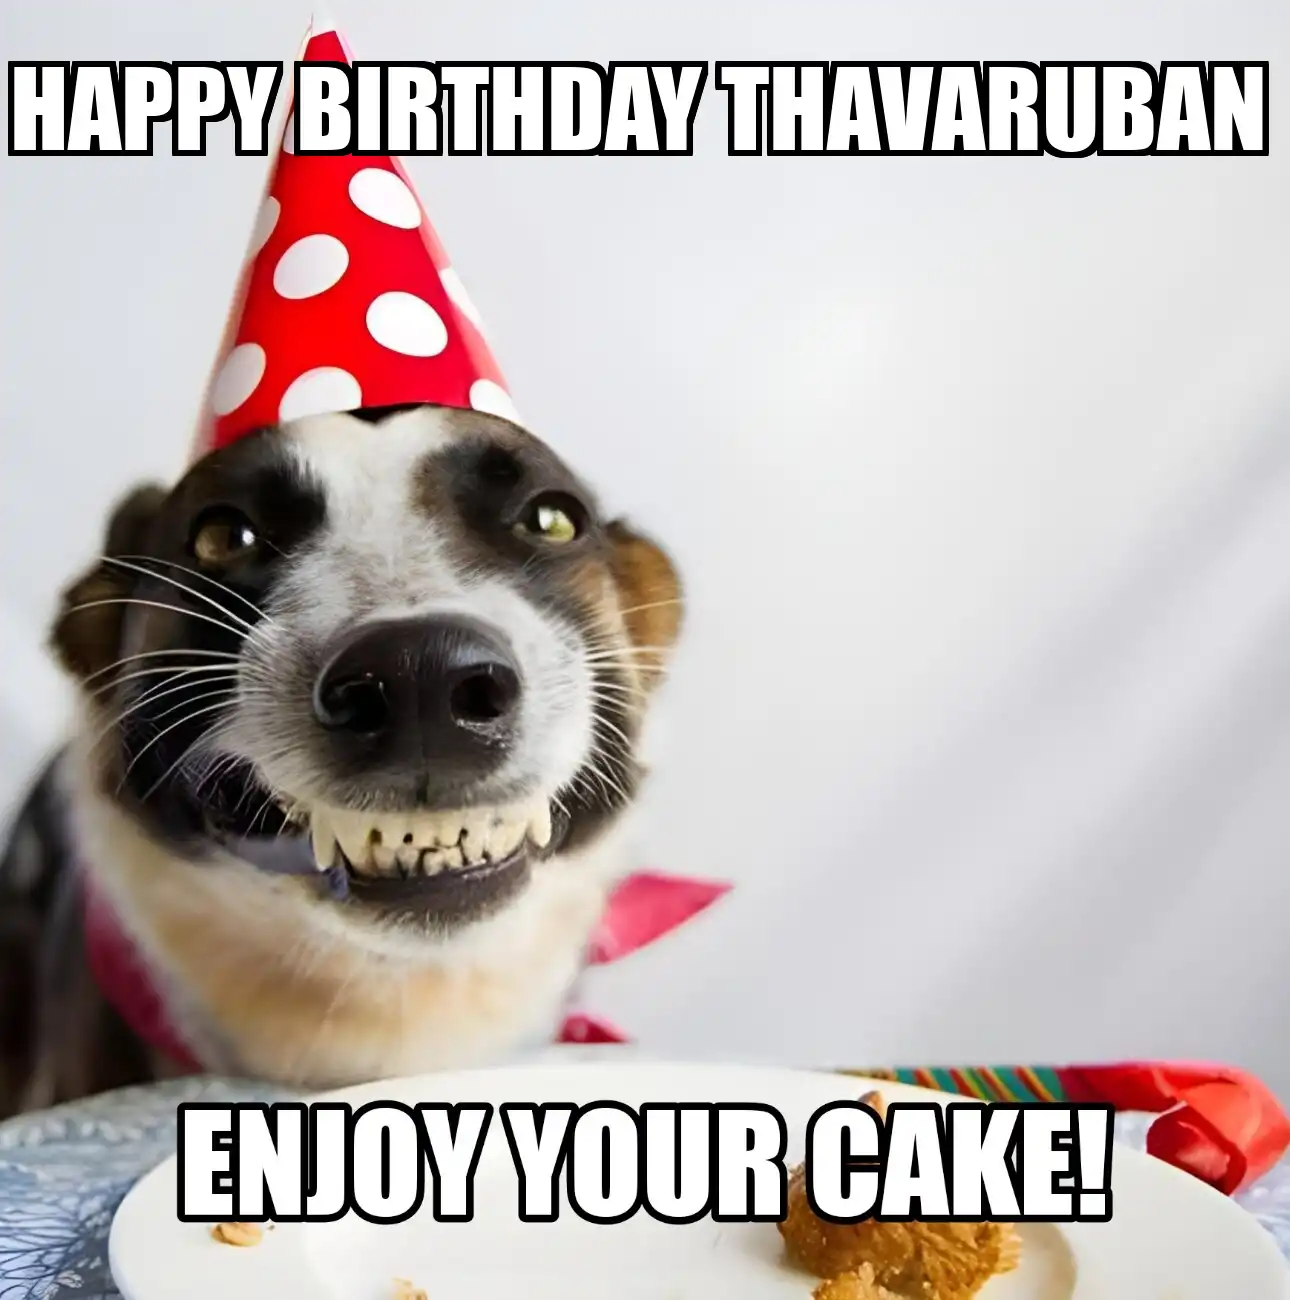 Happy Birthday Thavaruban Enjoy Your Cake Dog Meme